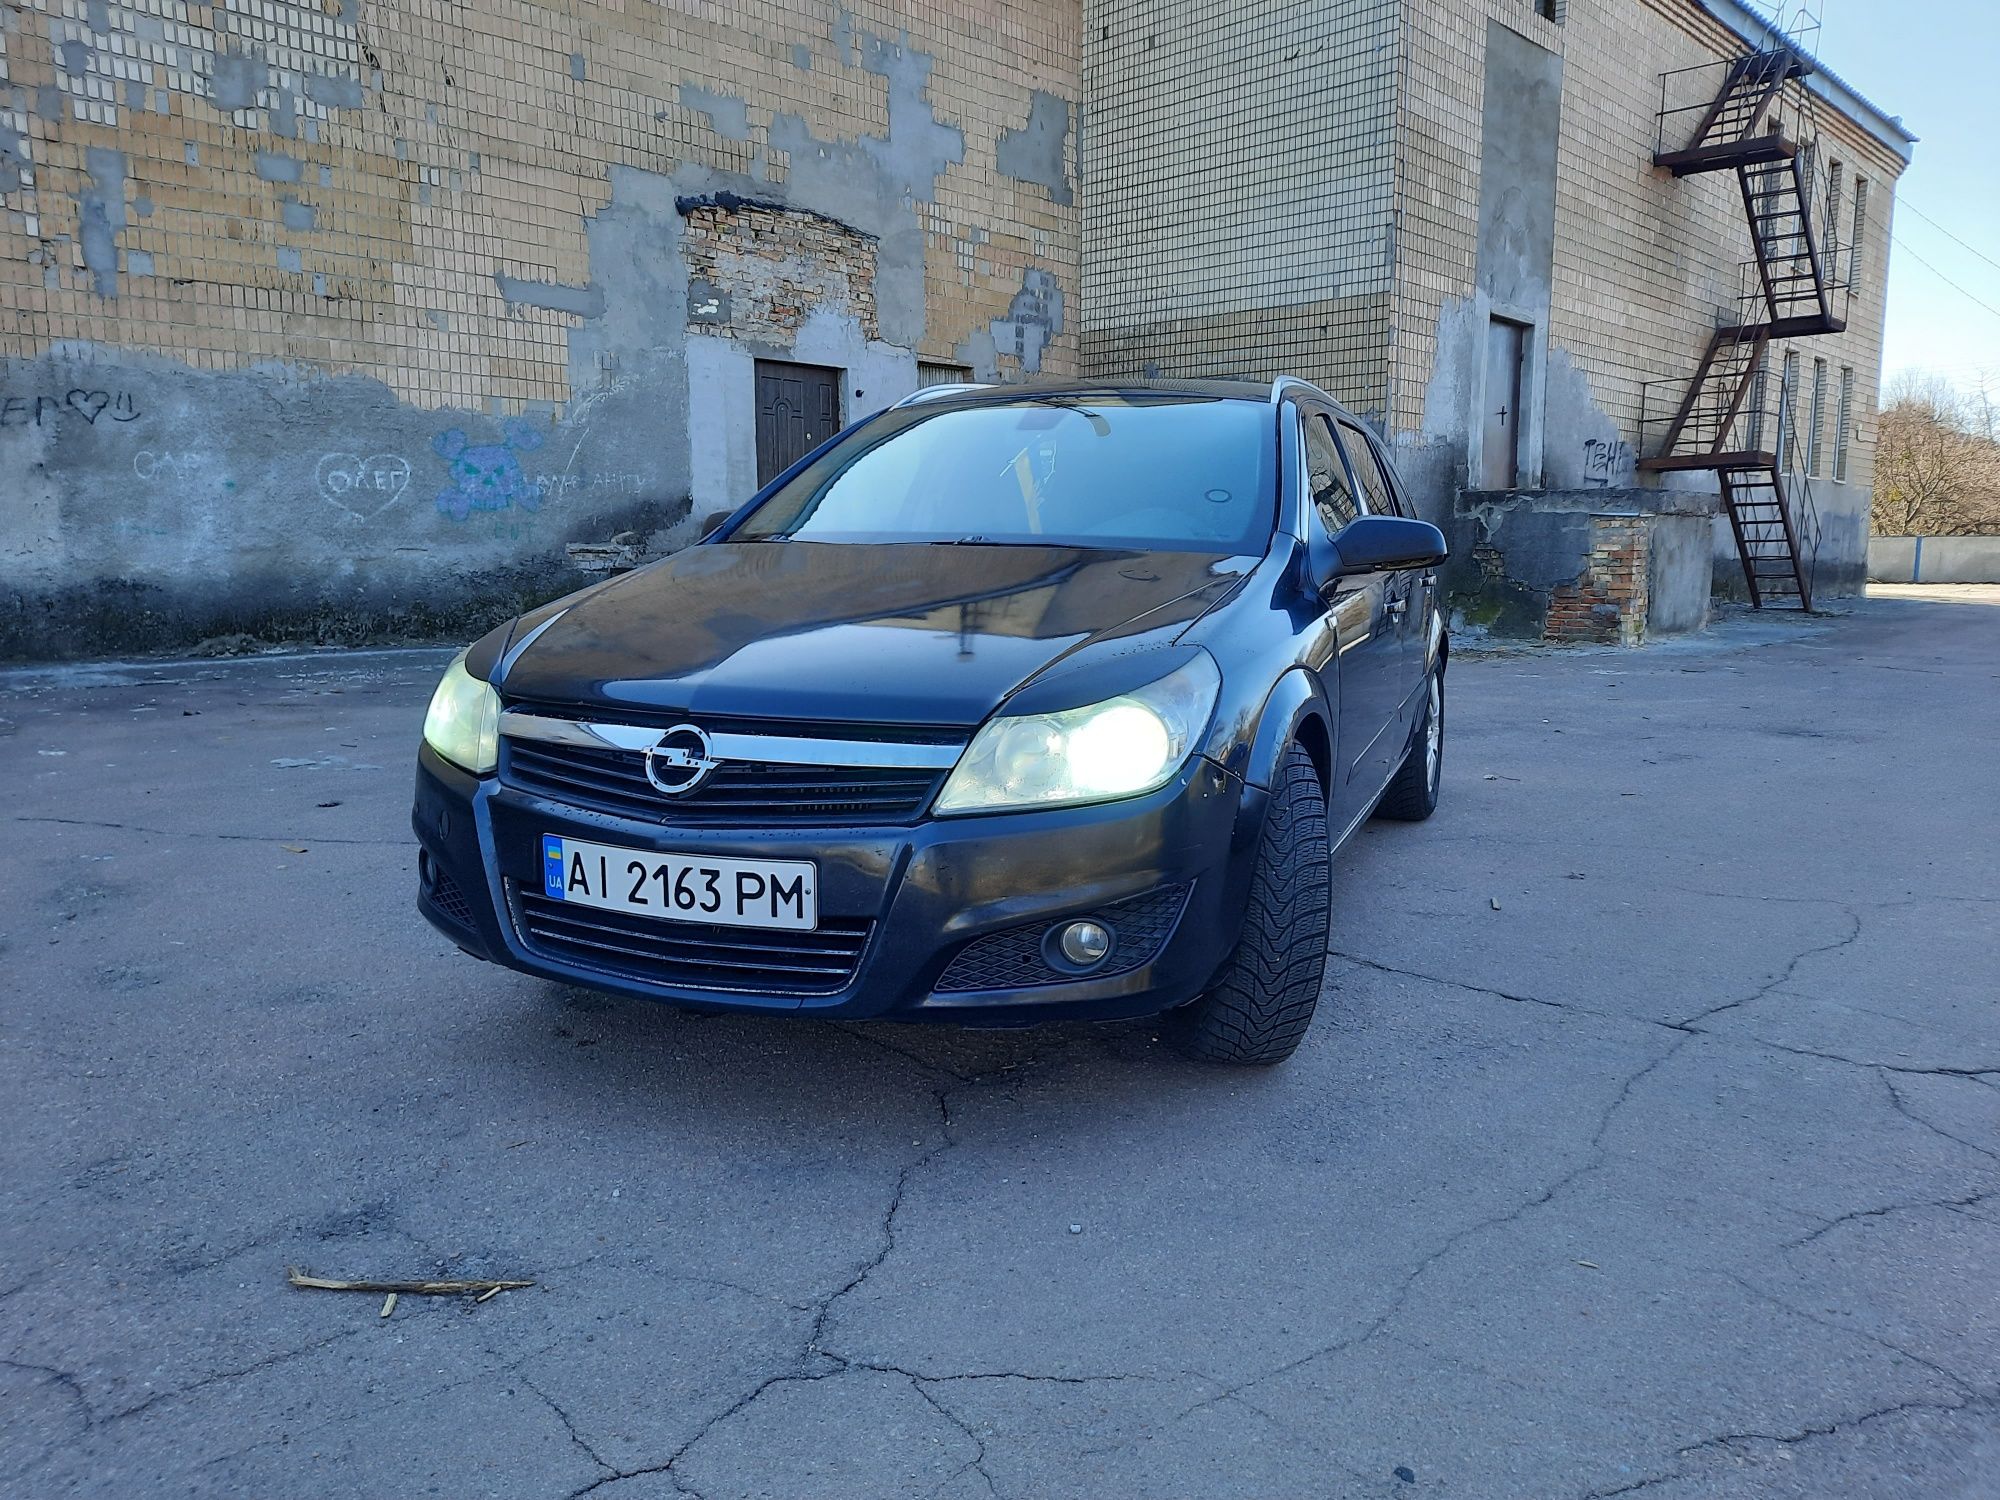 Opel astra h 1.9cdti